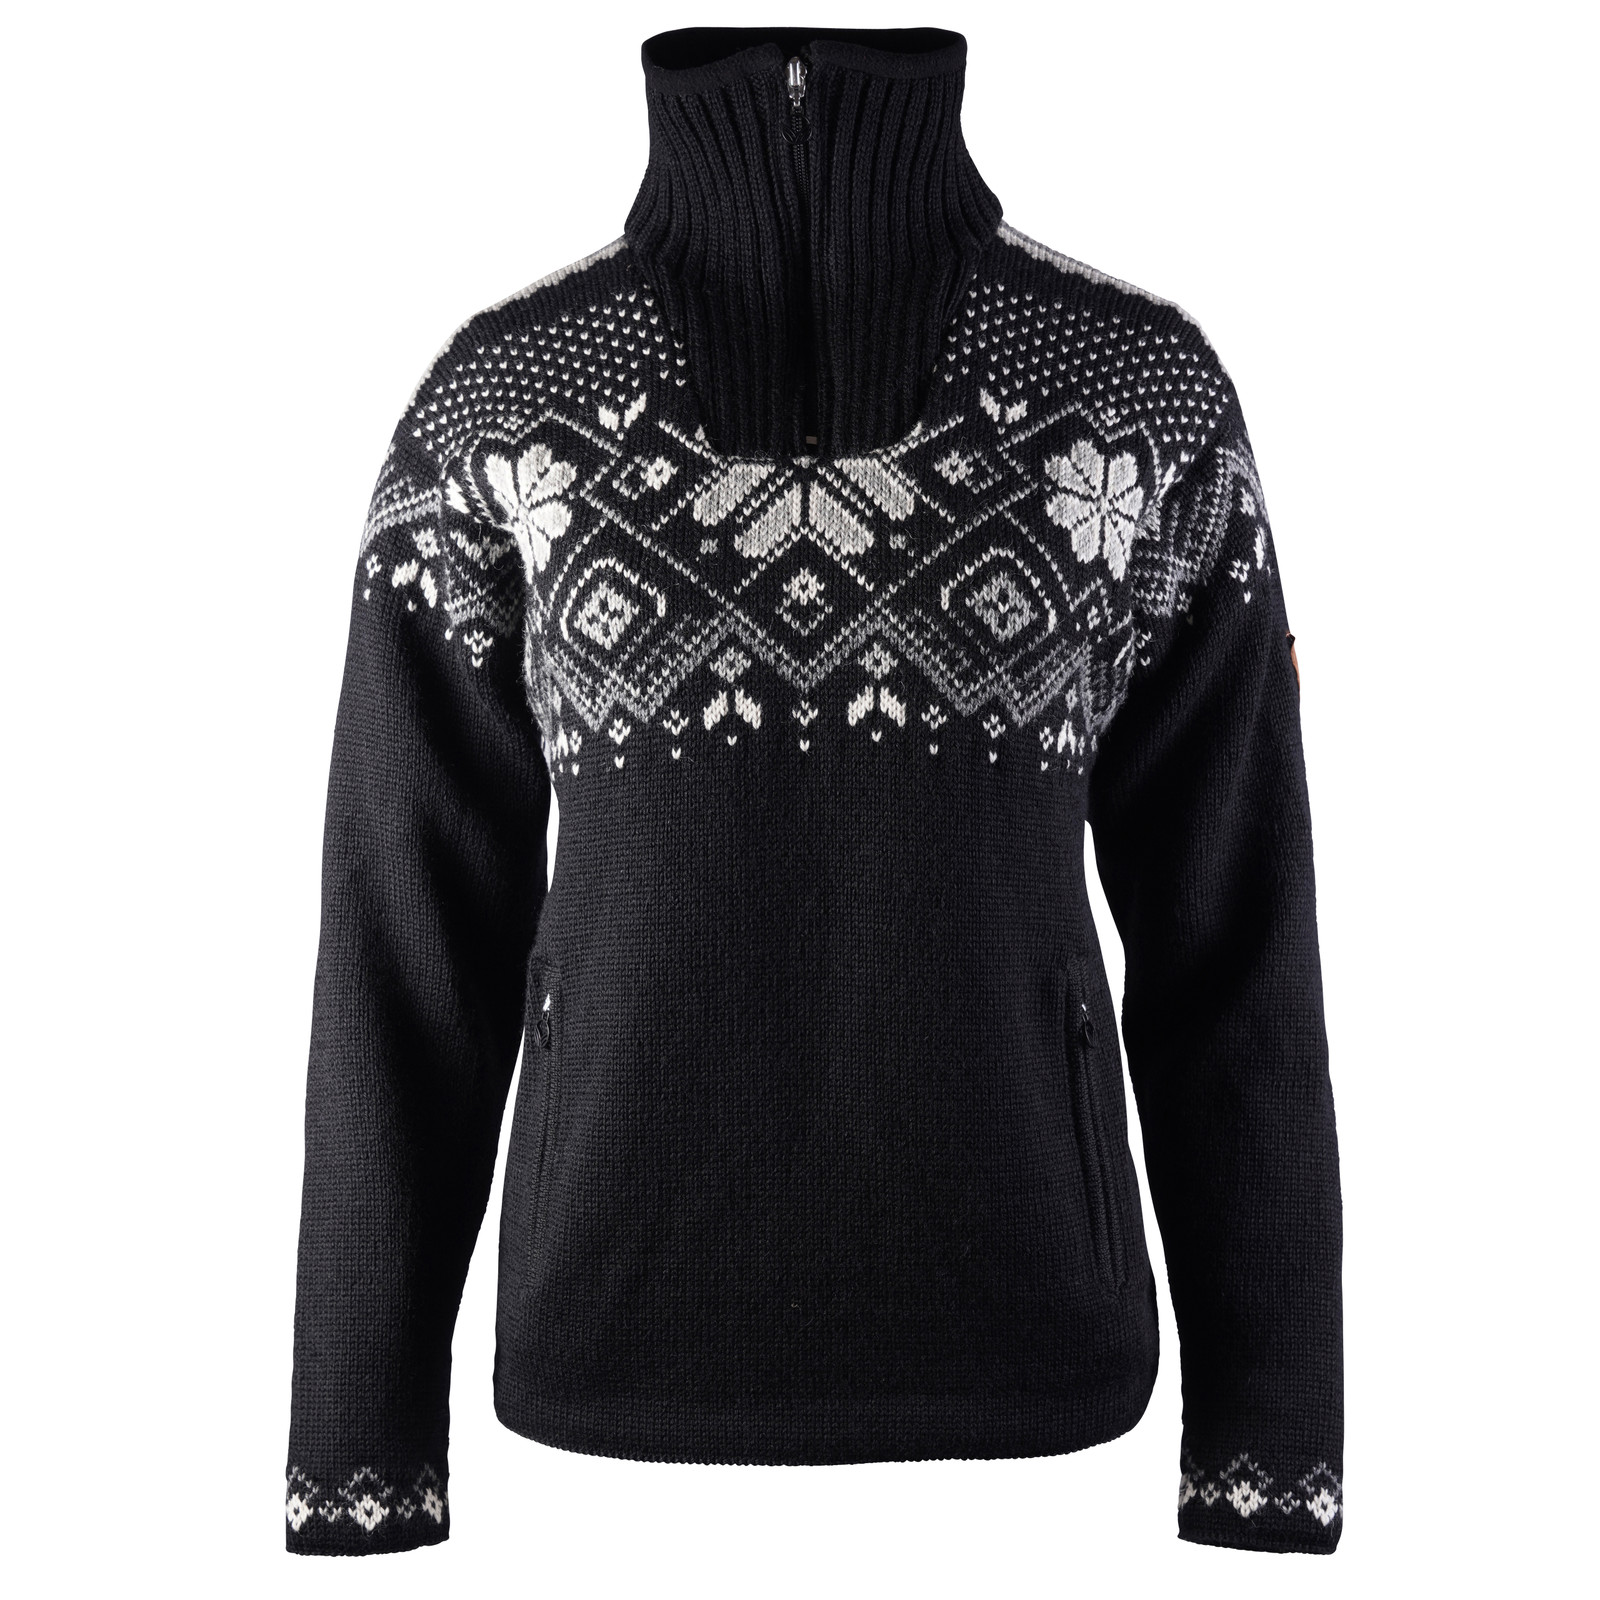 Dale of Norway Fongen Windstopper Sweater, Ladies - Black/Off White/Smoke/Light Charcoal, 93961-F